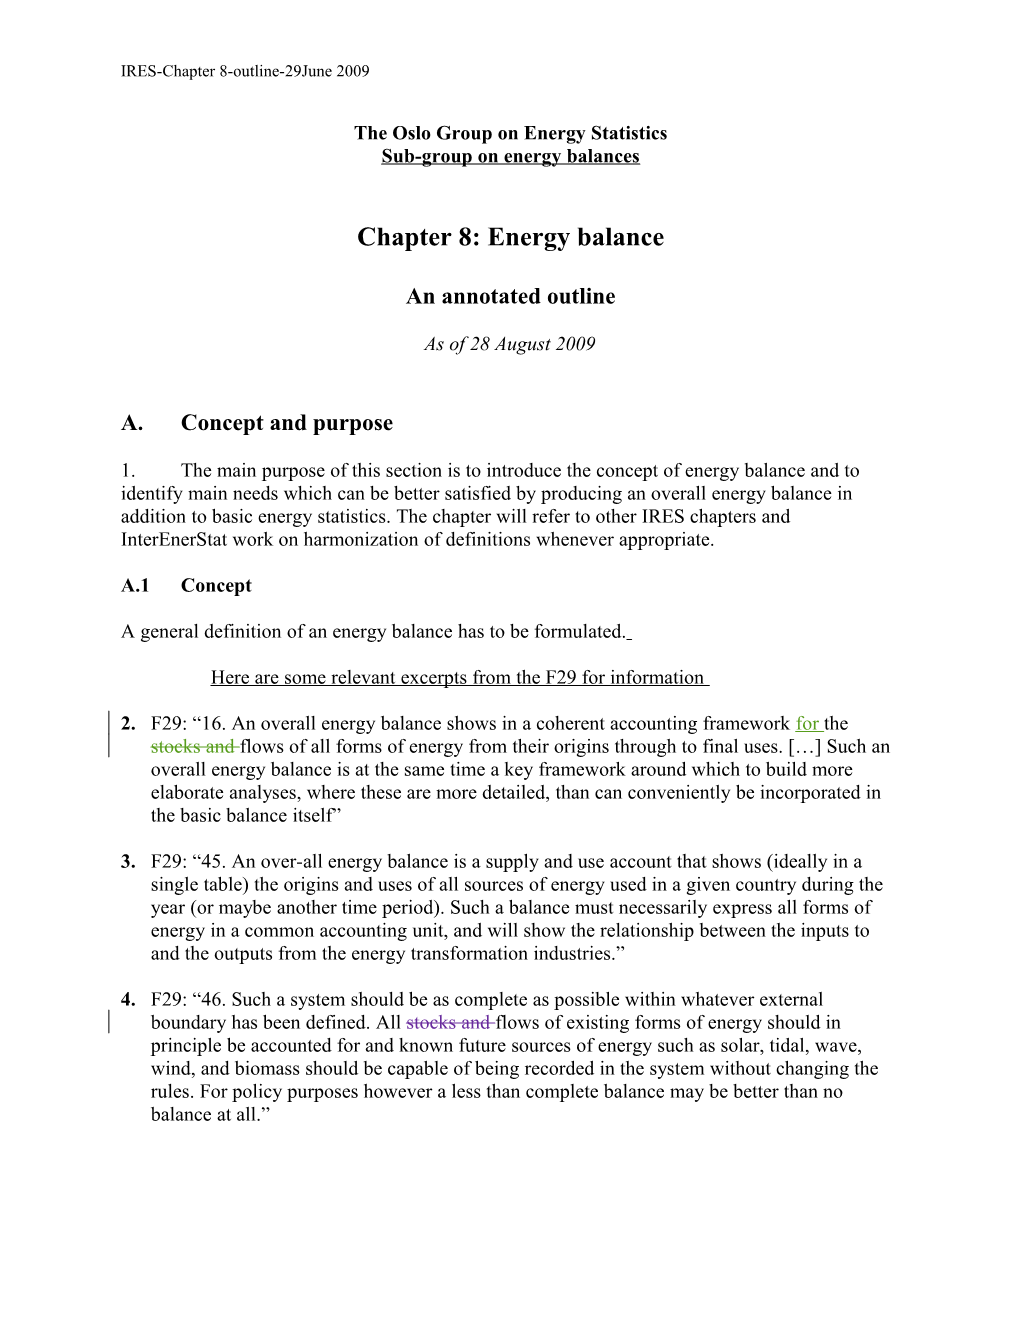 The Oslo Group on Energy Statistics